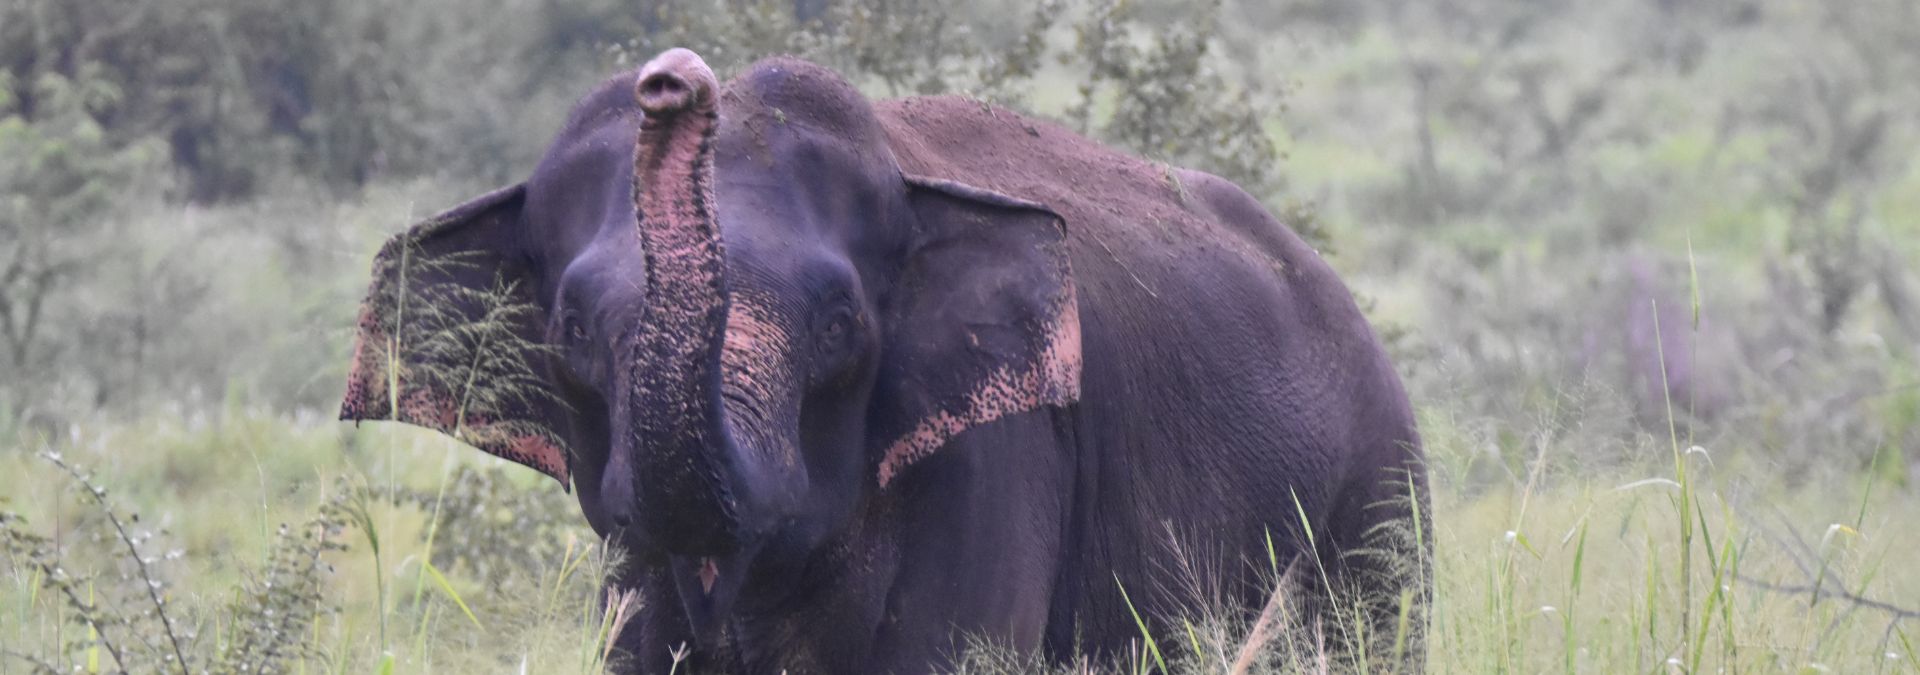 an elephant at gal oya national park in sri lanka 